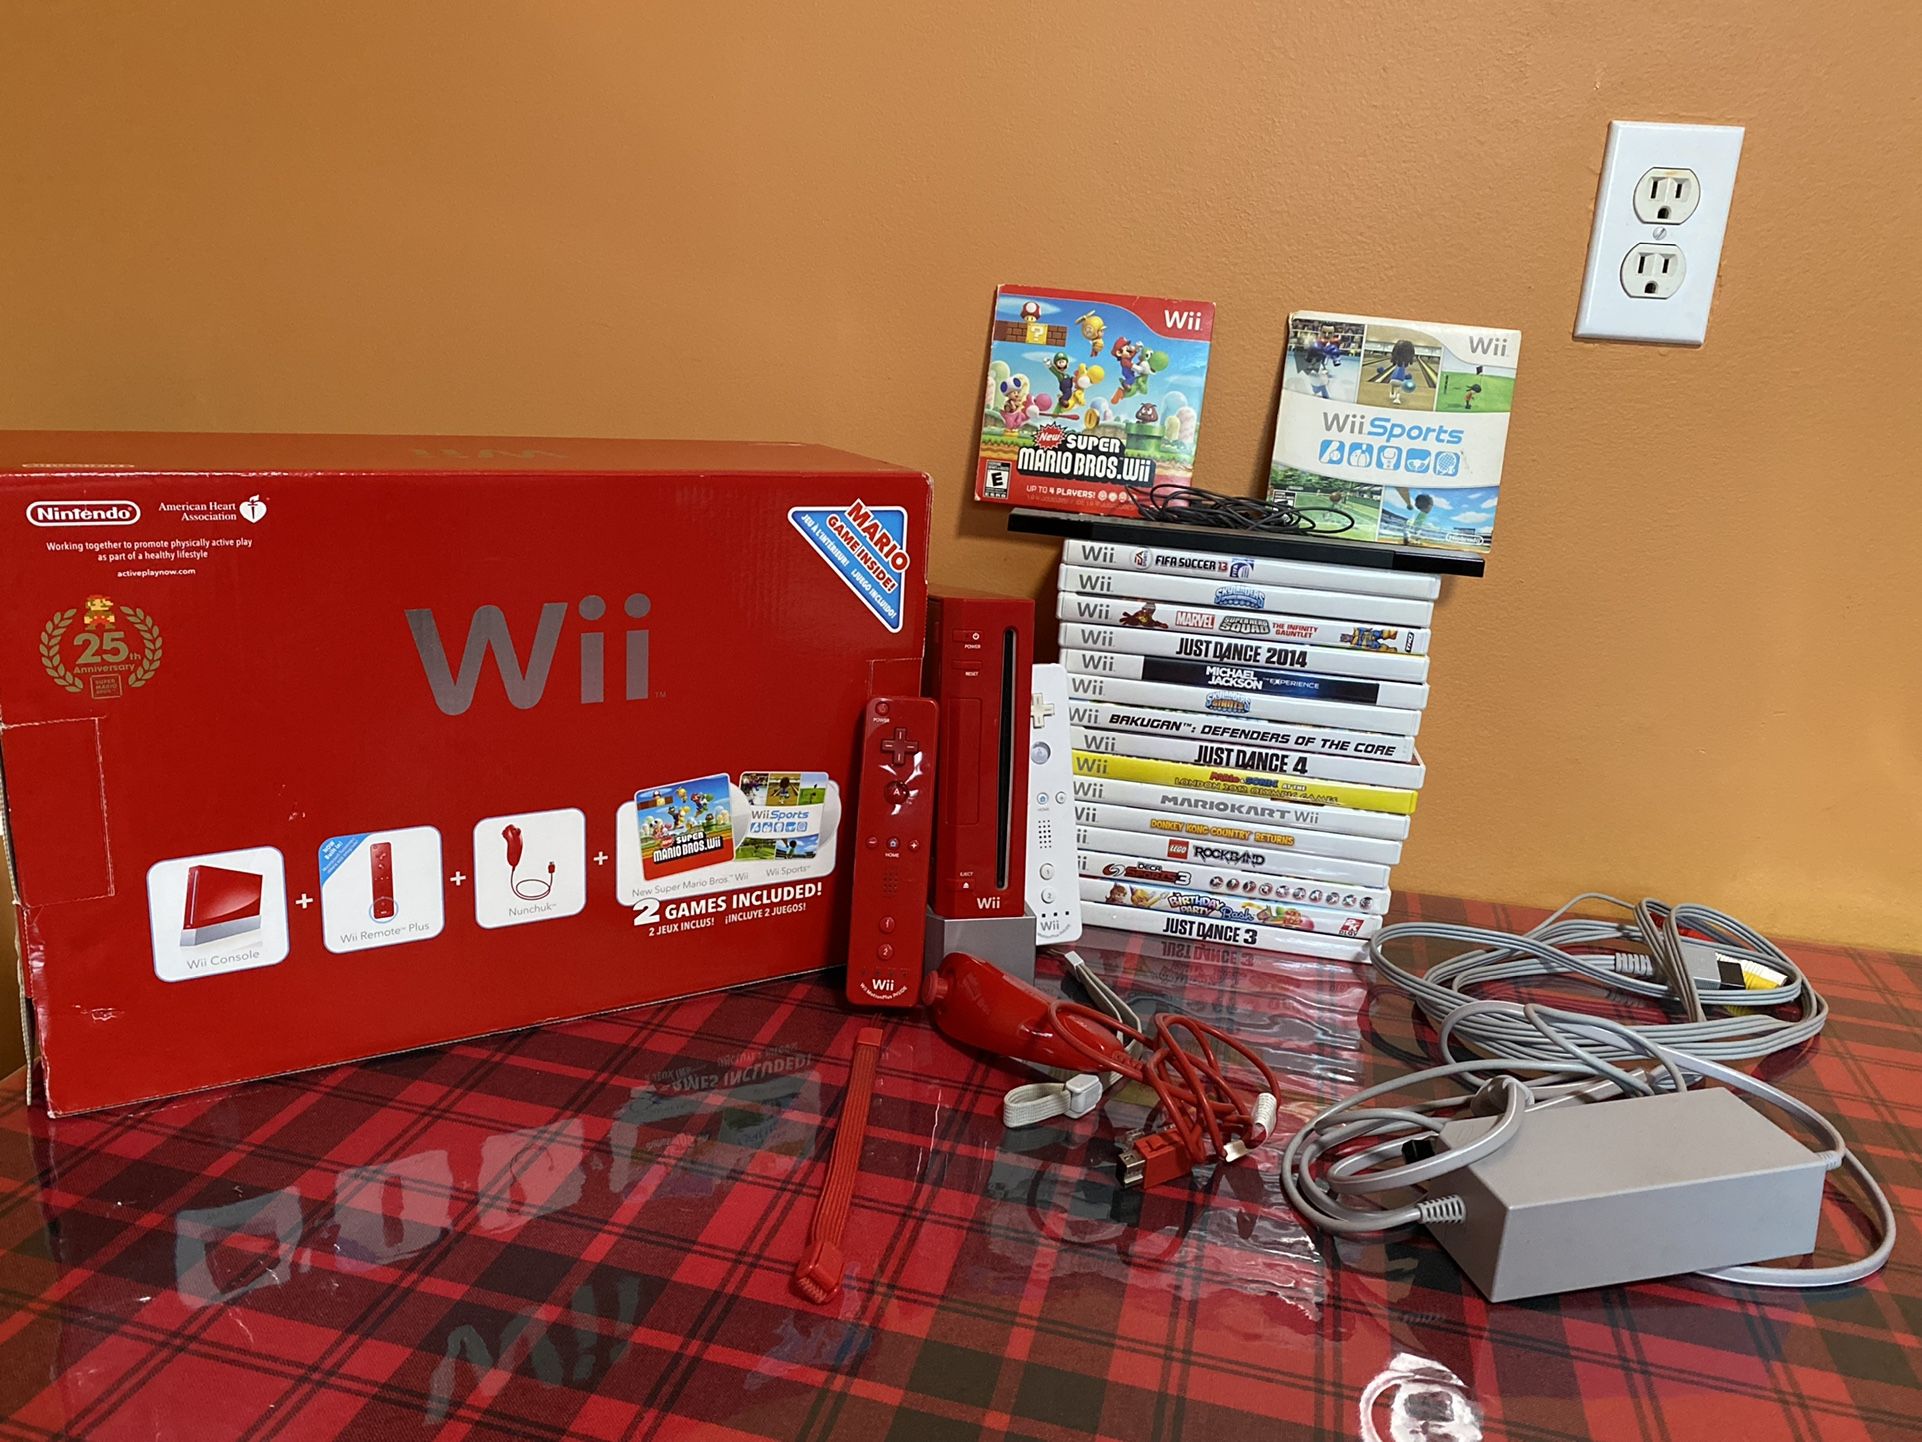 Wii 25th Anniversary Super Mario Bros + Games + Skylanders + Controllers For Mario Kart + Etc